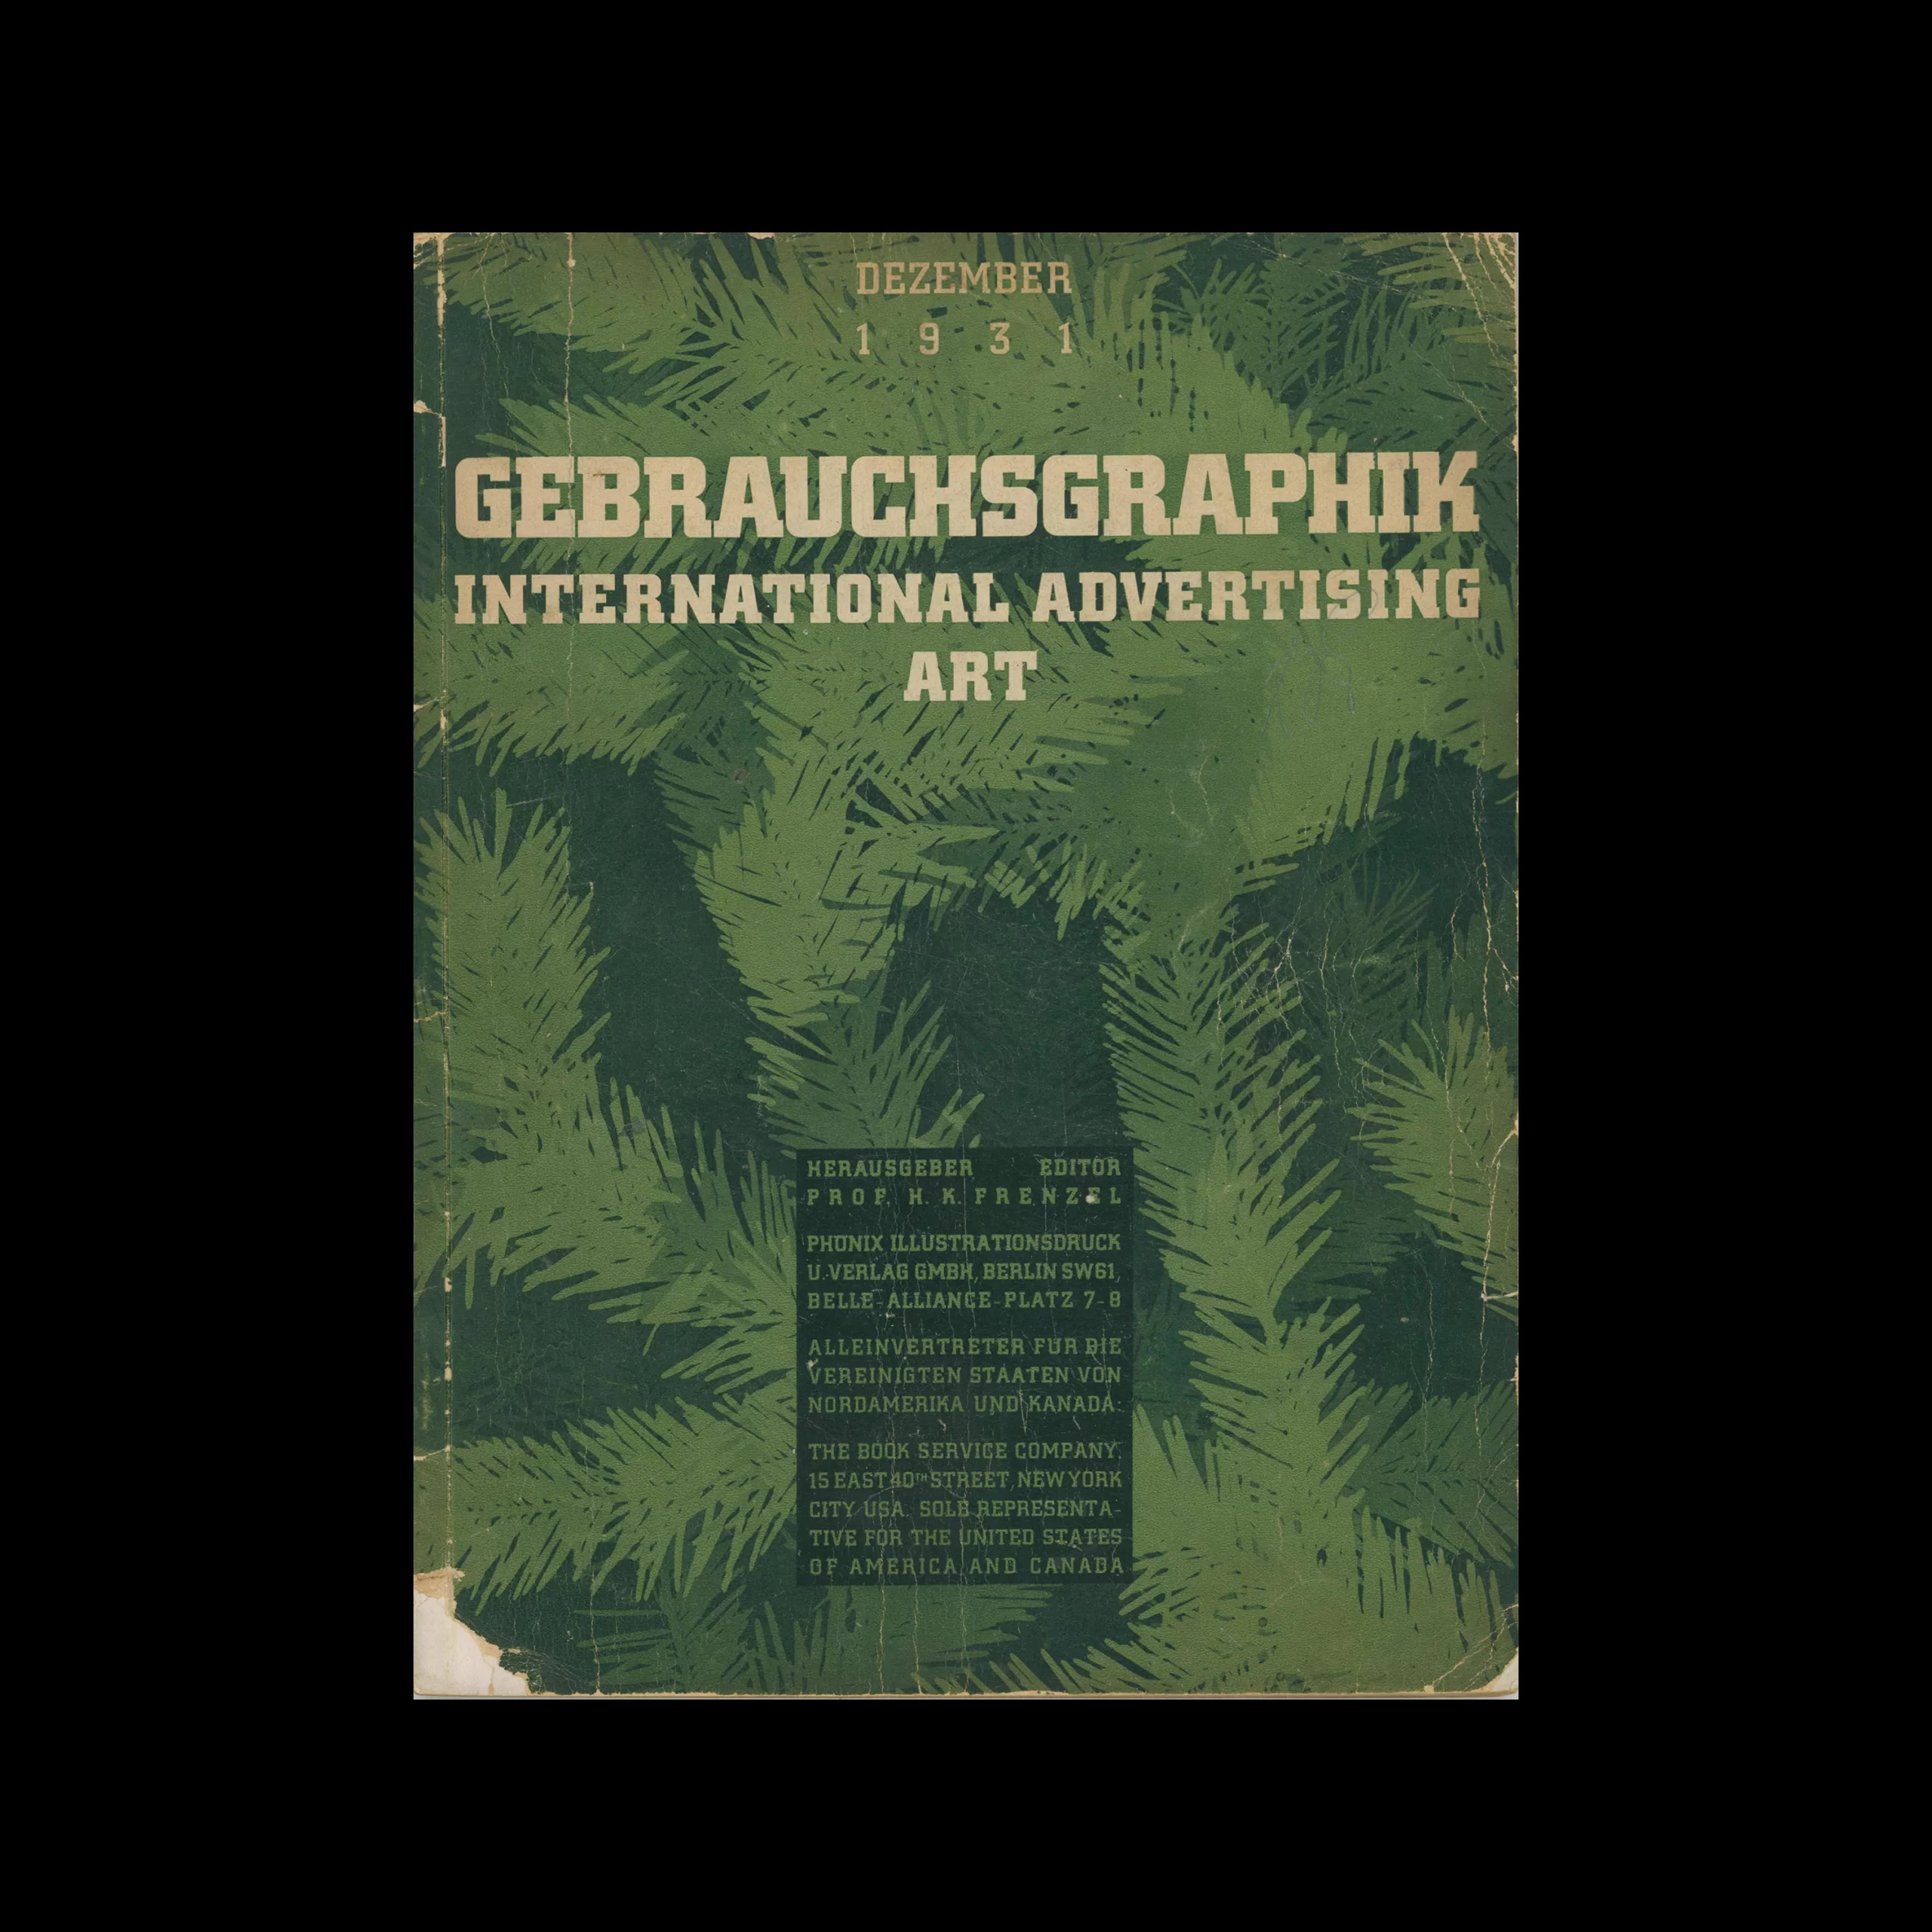 Gebrauchsgraphik, 12, 1931. Cover design by Hermann Virl